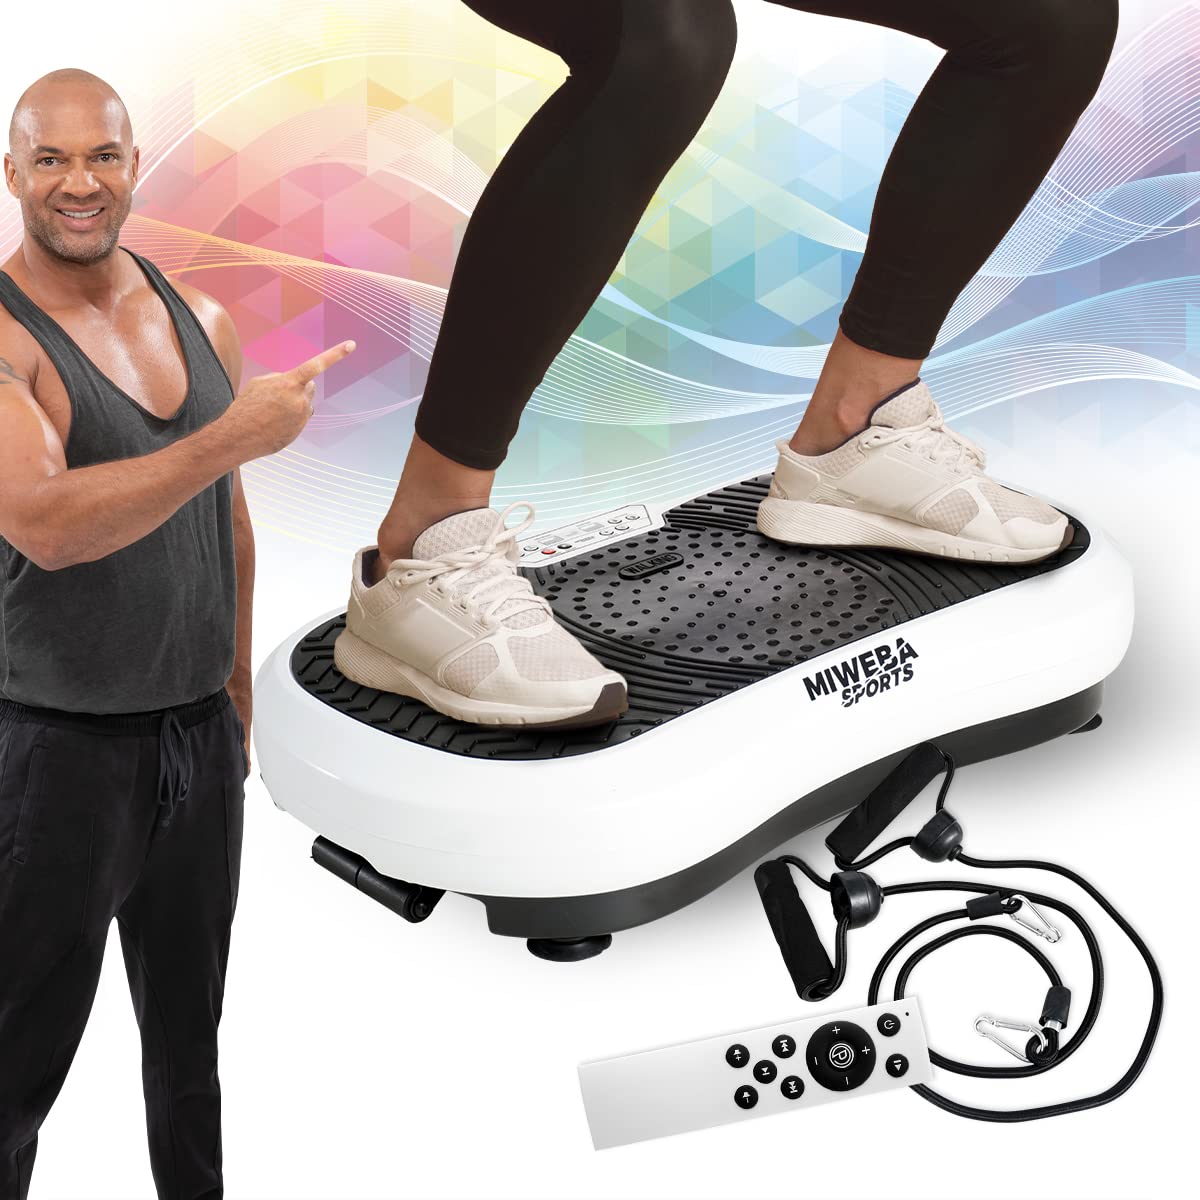 Miweba Sports Fitness 2D Vibrationsplatte MV100 | 3 Jahre Garantie - 250 Watt - 3 multidimensionale Vibrationszonen - Oszillierend - Abnehmen - Fettverbrenner - Fitnessgeräte für Zuhause (Weiß)